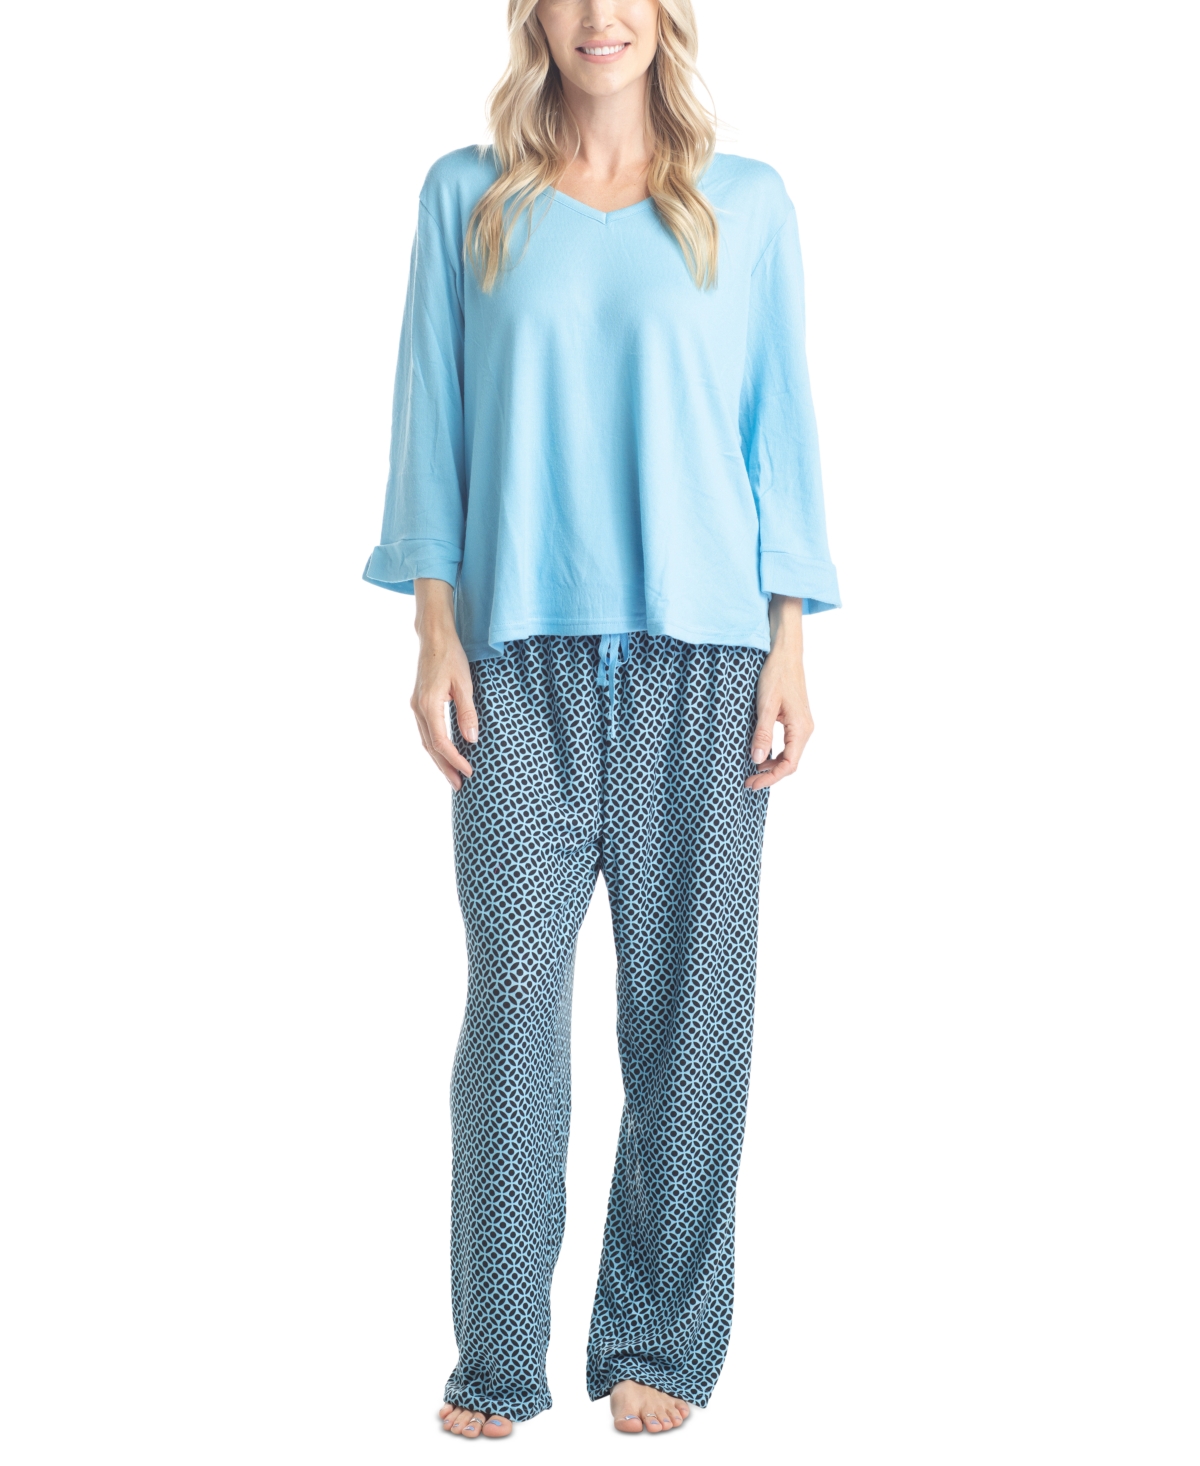 Muk Luks Plus Size 3/4 Sleeve Top & Boot-cut Pajama Pants Set In Teal Paisley